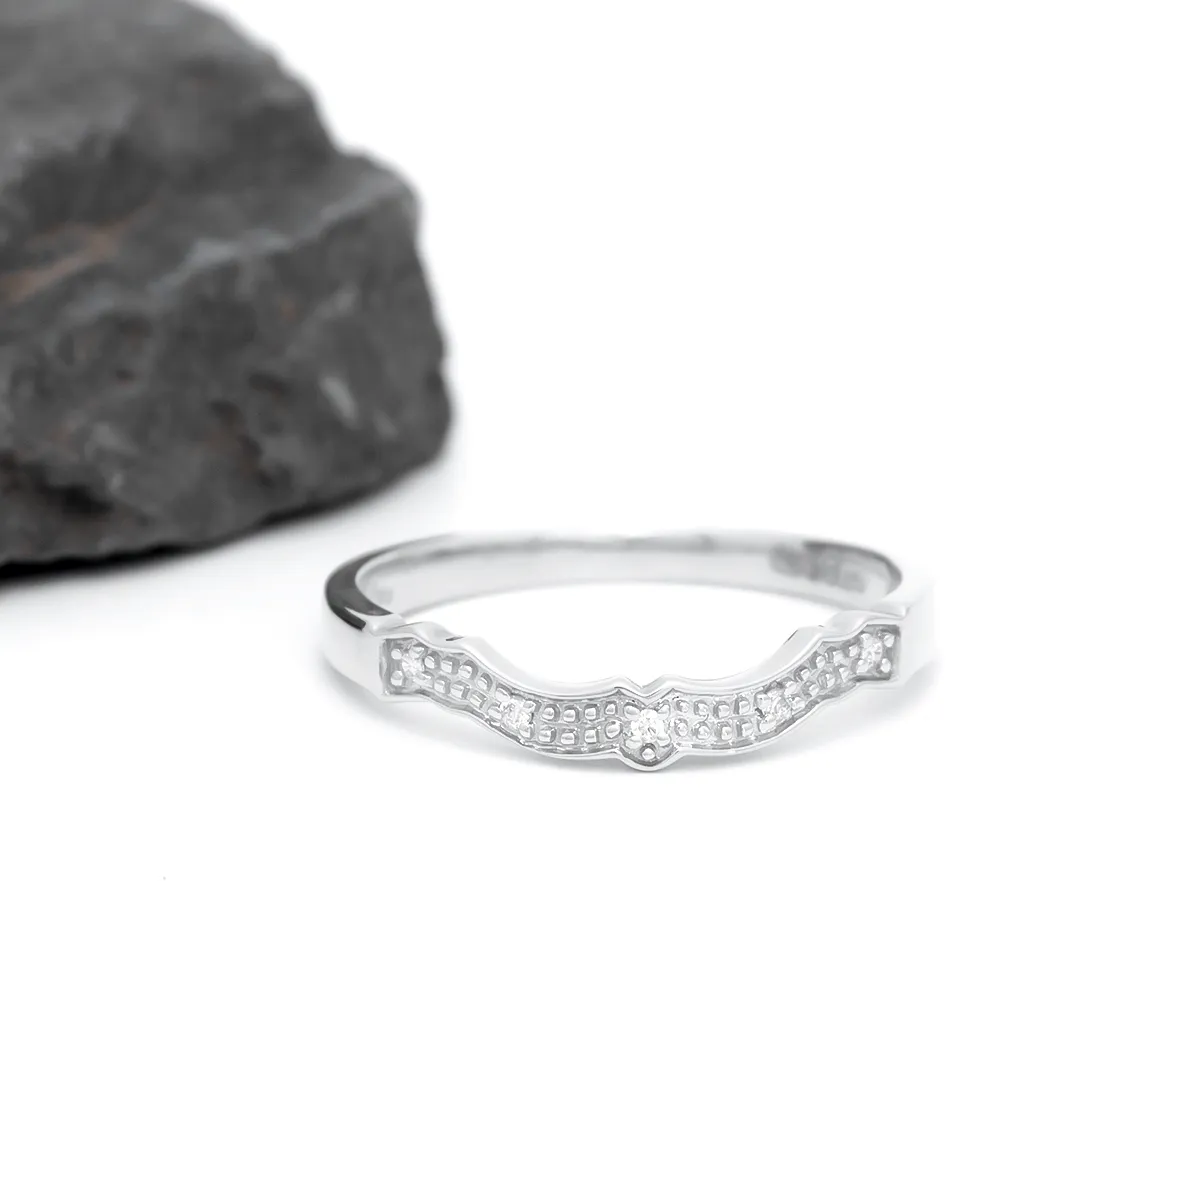 14k White Gold Shaped Wedding Band to Match Engagement Ring...